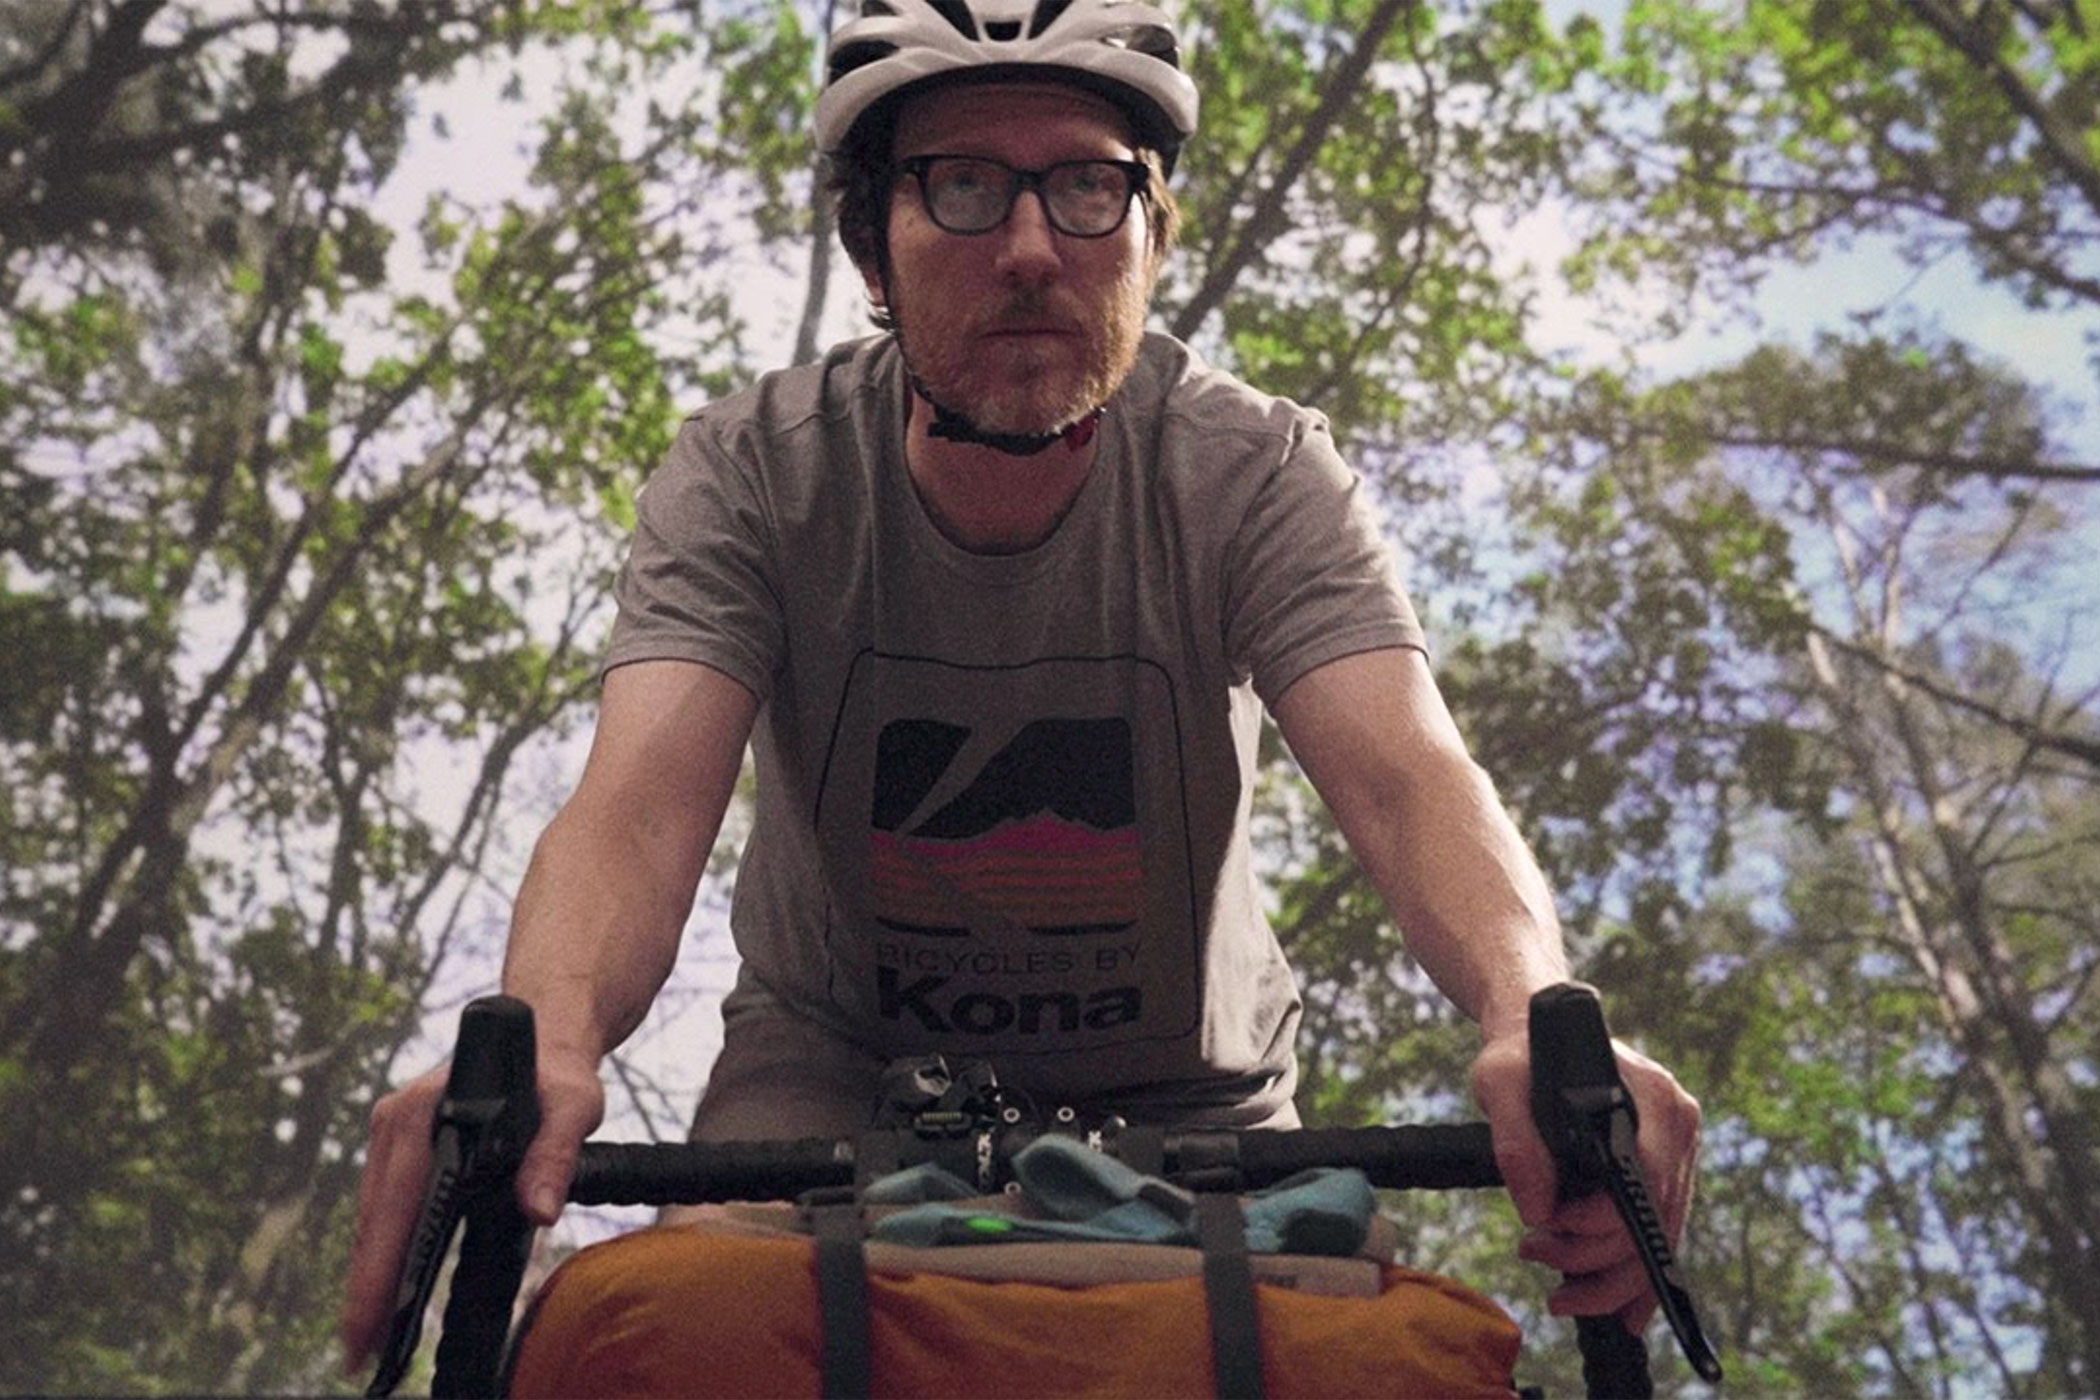 Home Trippin bikepacking video